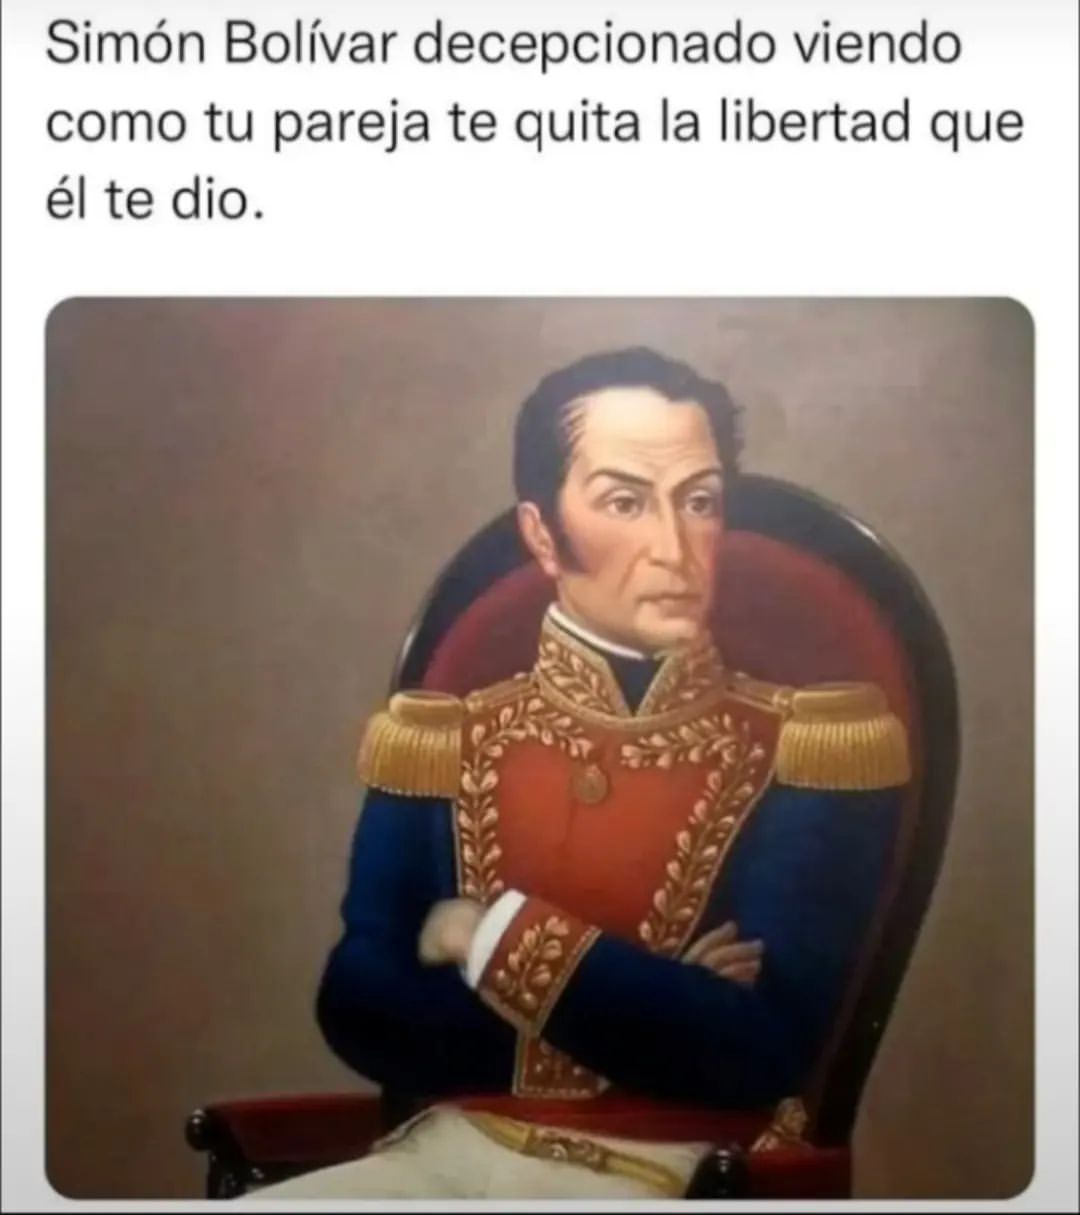 Simón Bolívar decepcionado viendo como tu pareja te quita la libertad que él te dio.